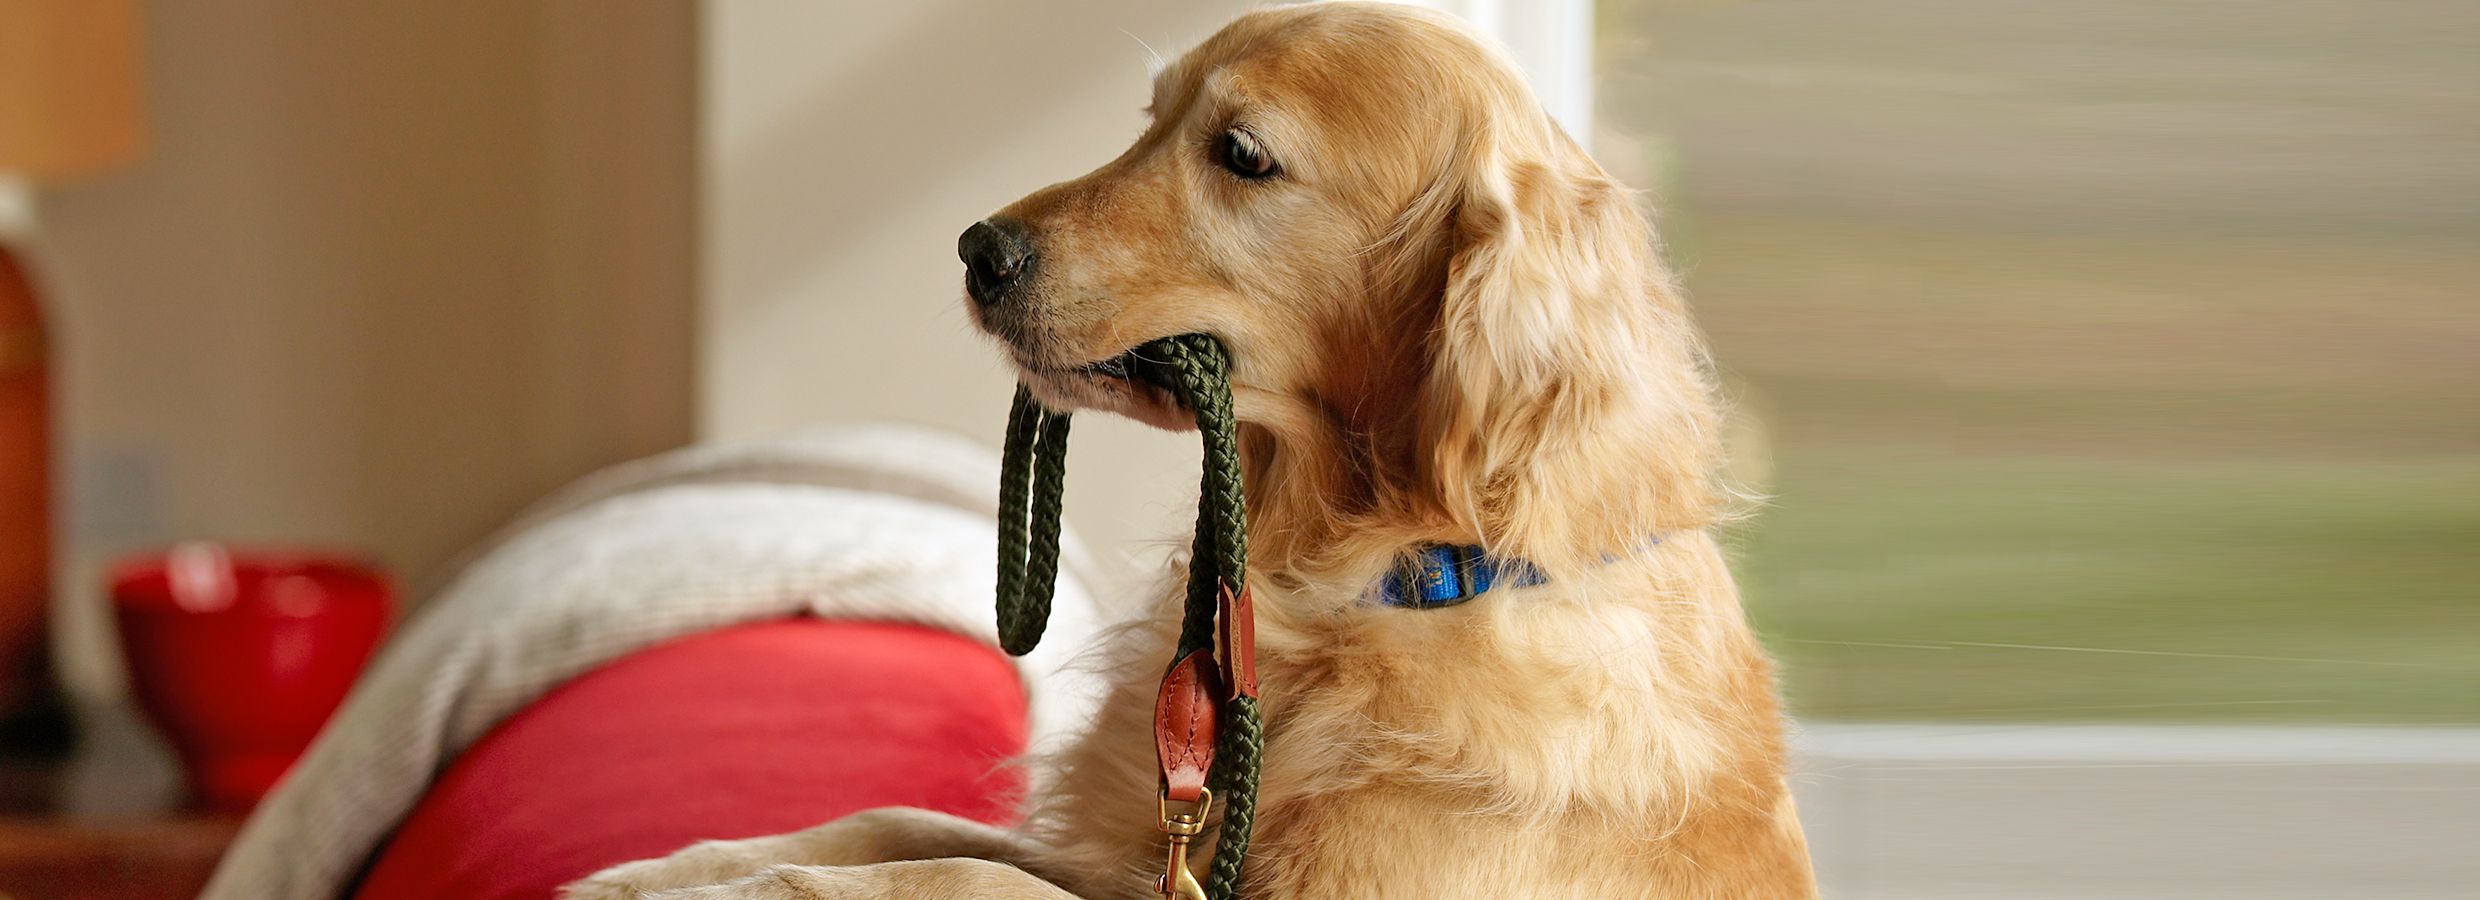 muzzle leash petsmart